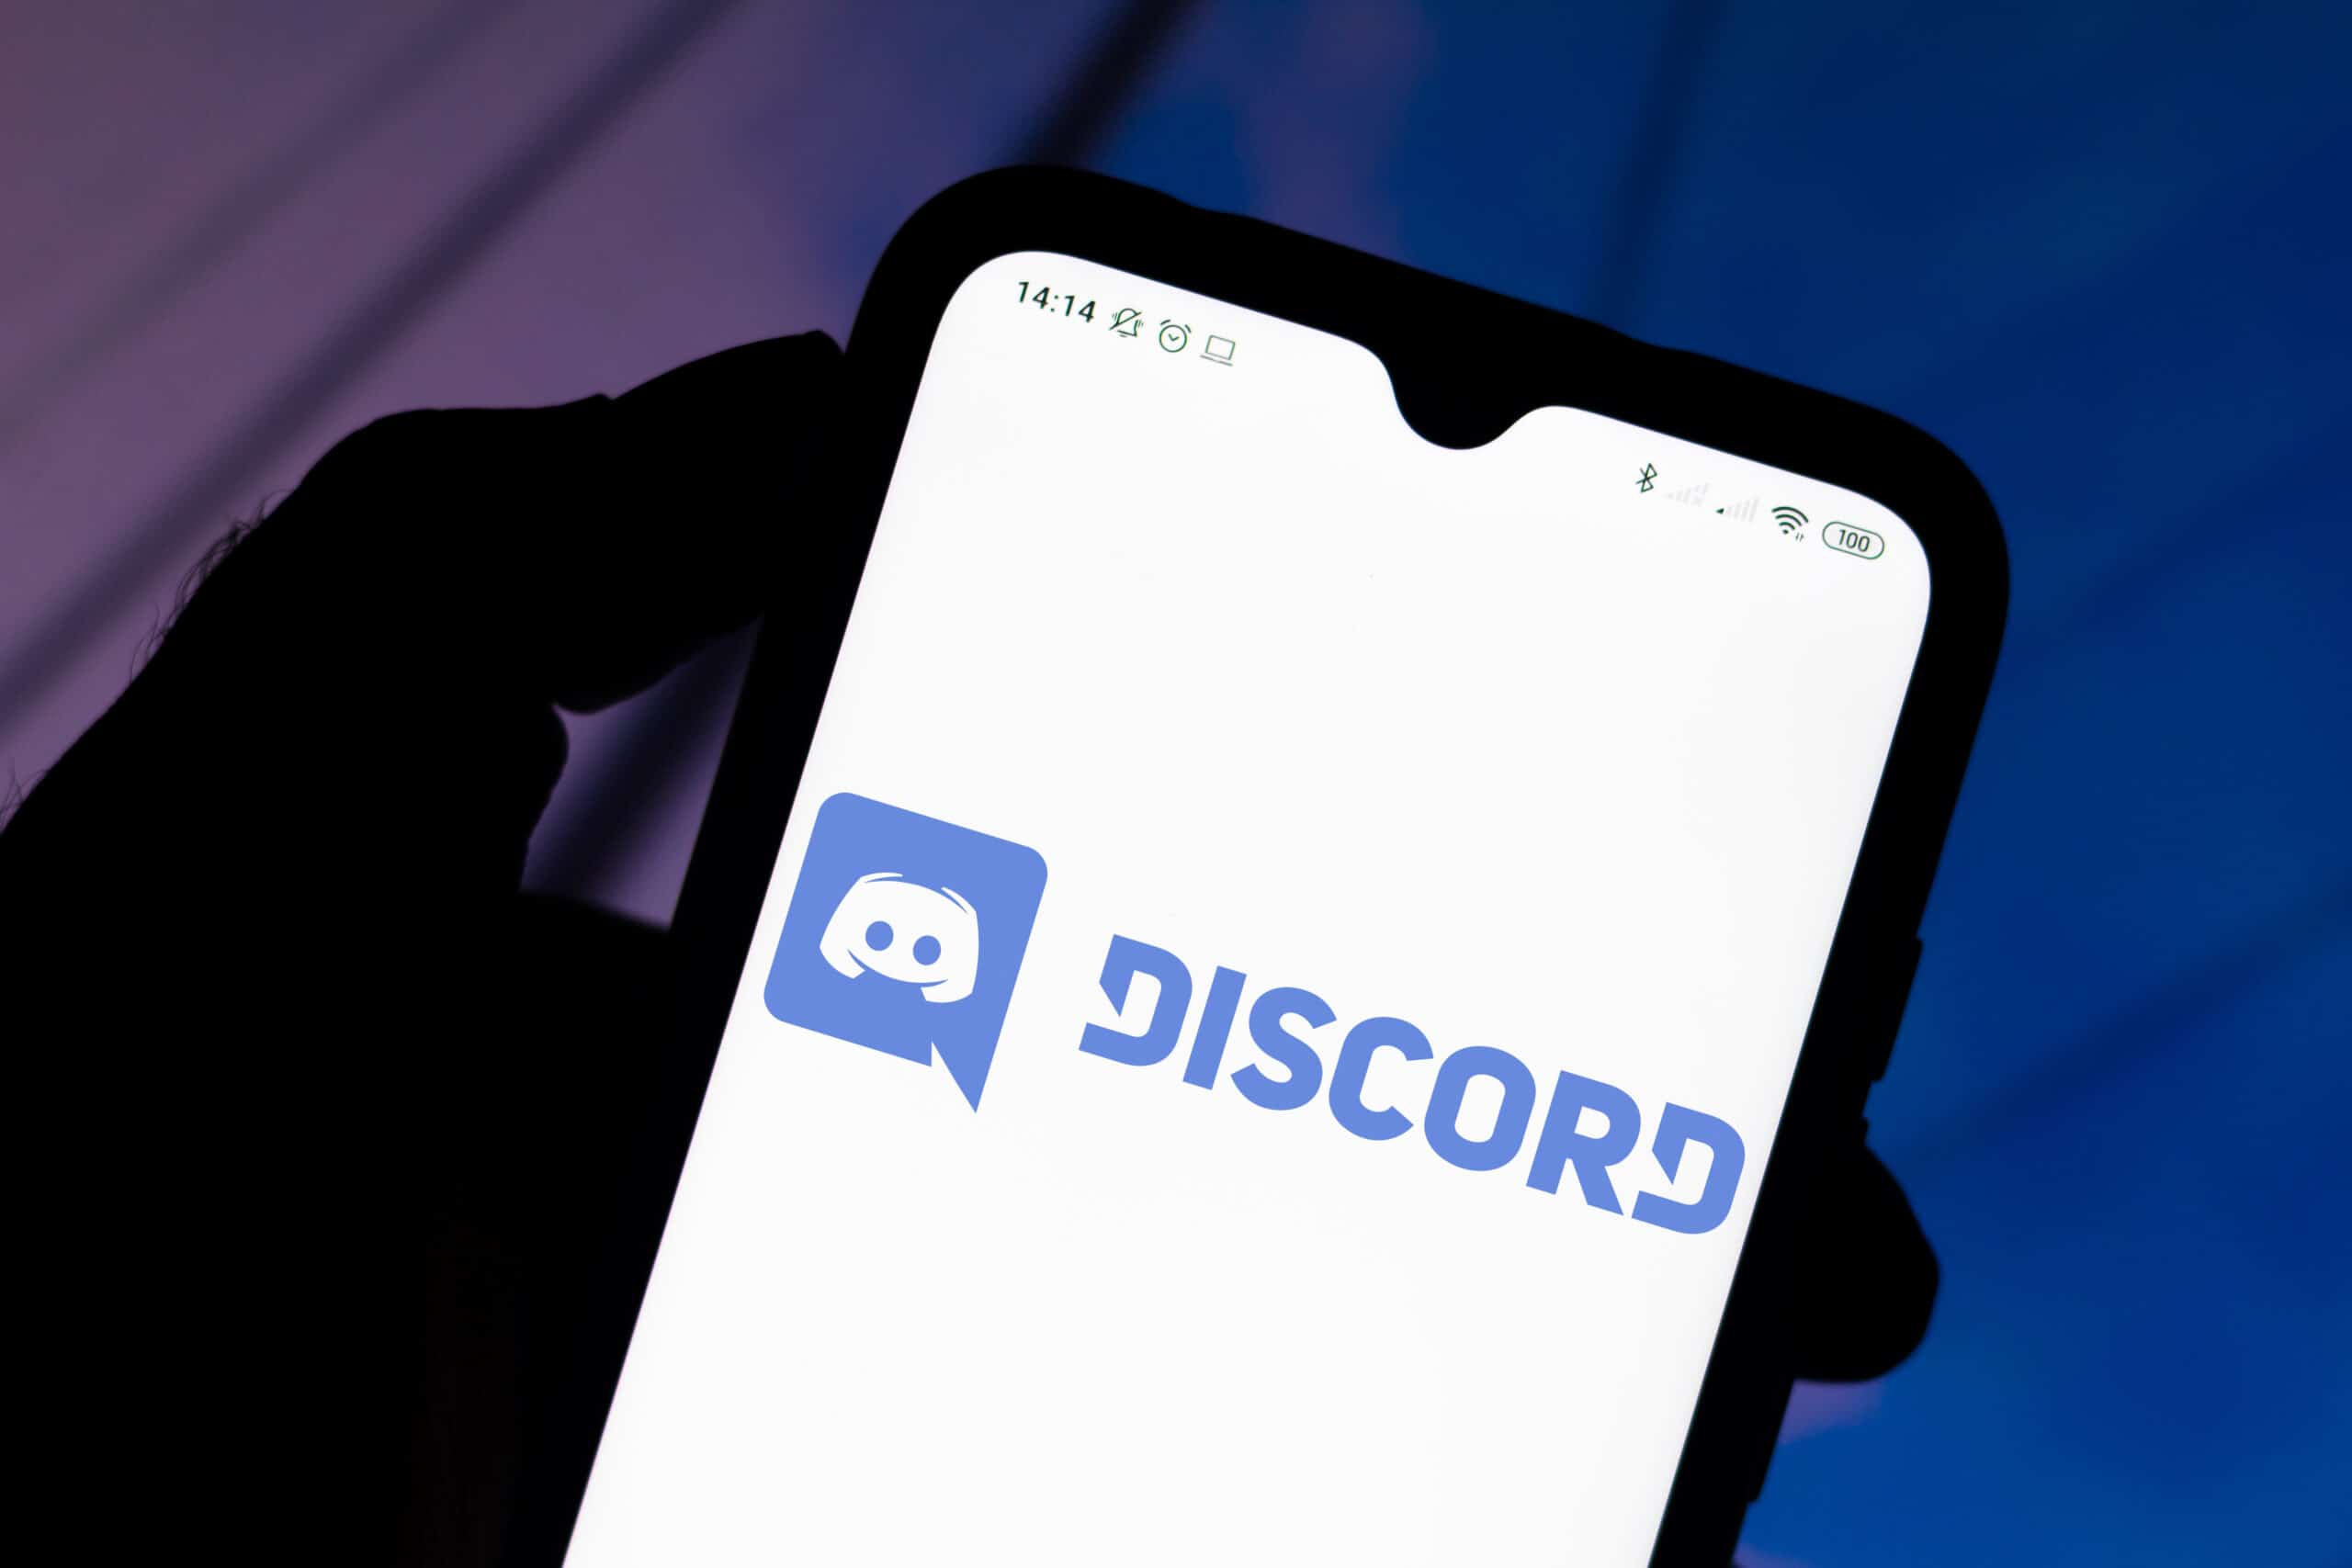 discord mobile app